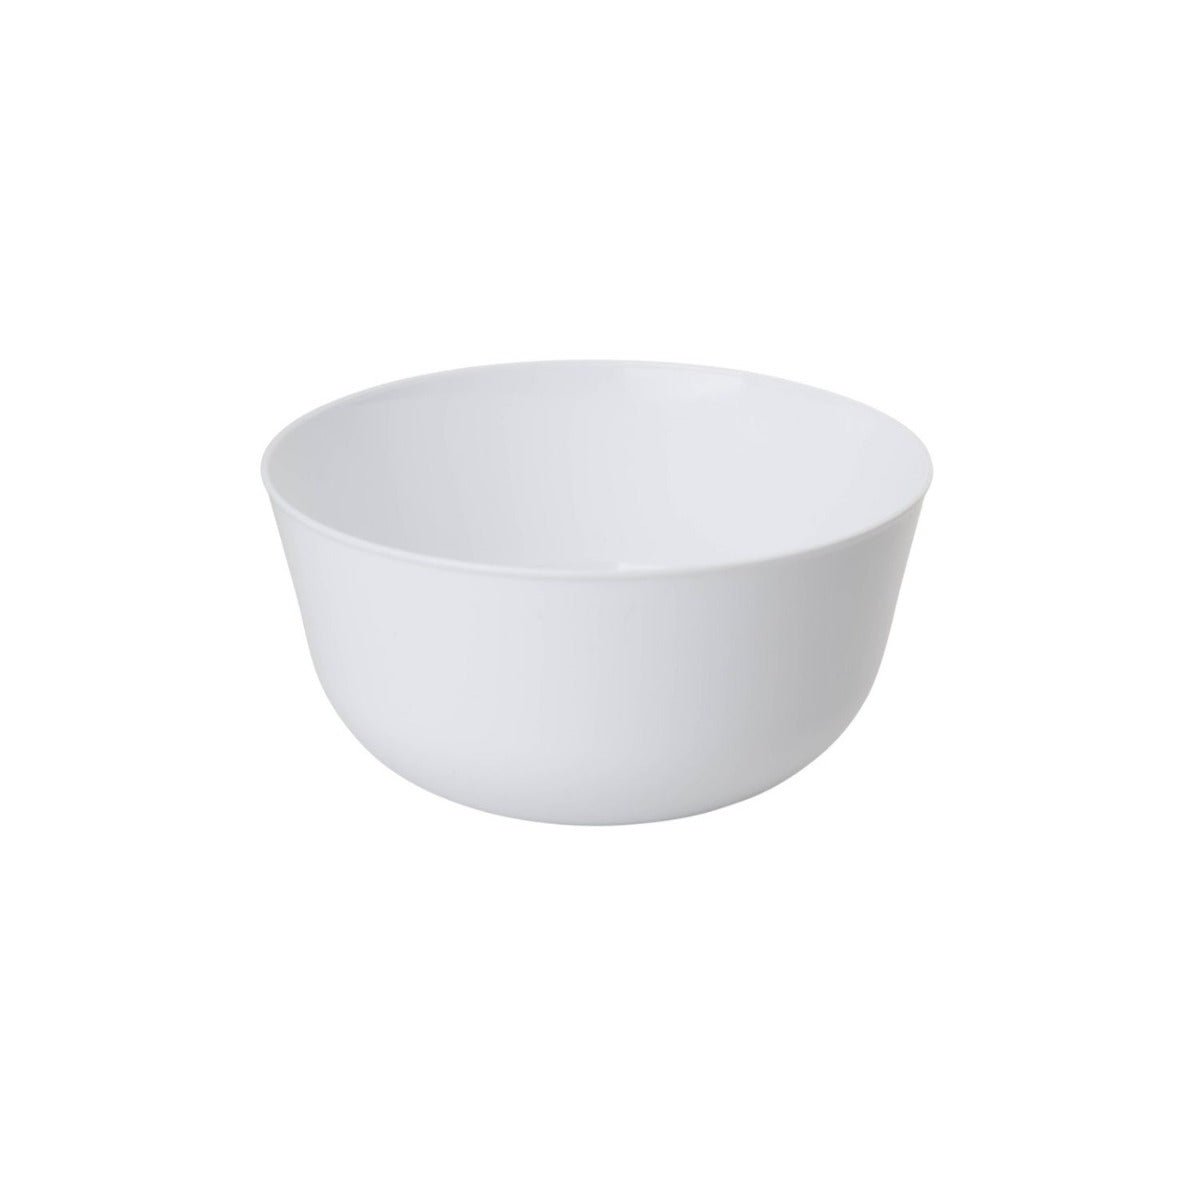 Classic Silver Design Plastic Bowls (120 Count)